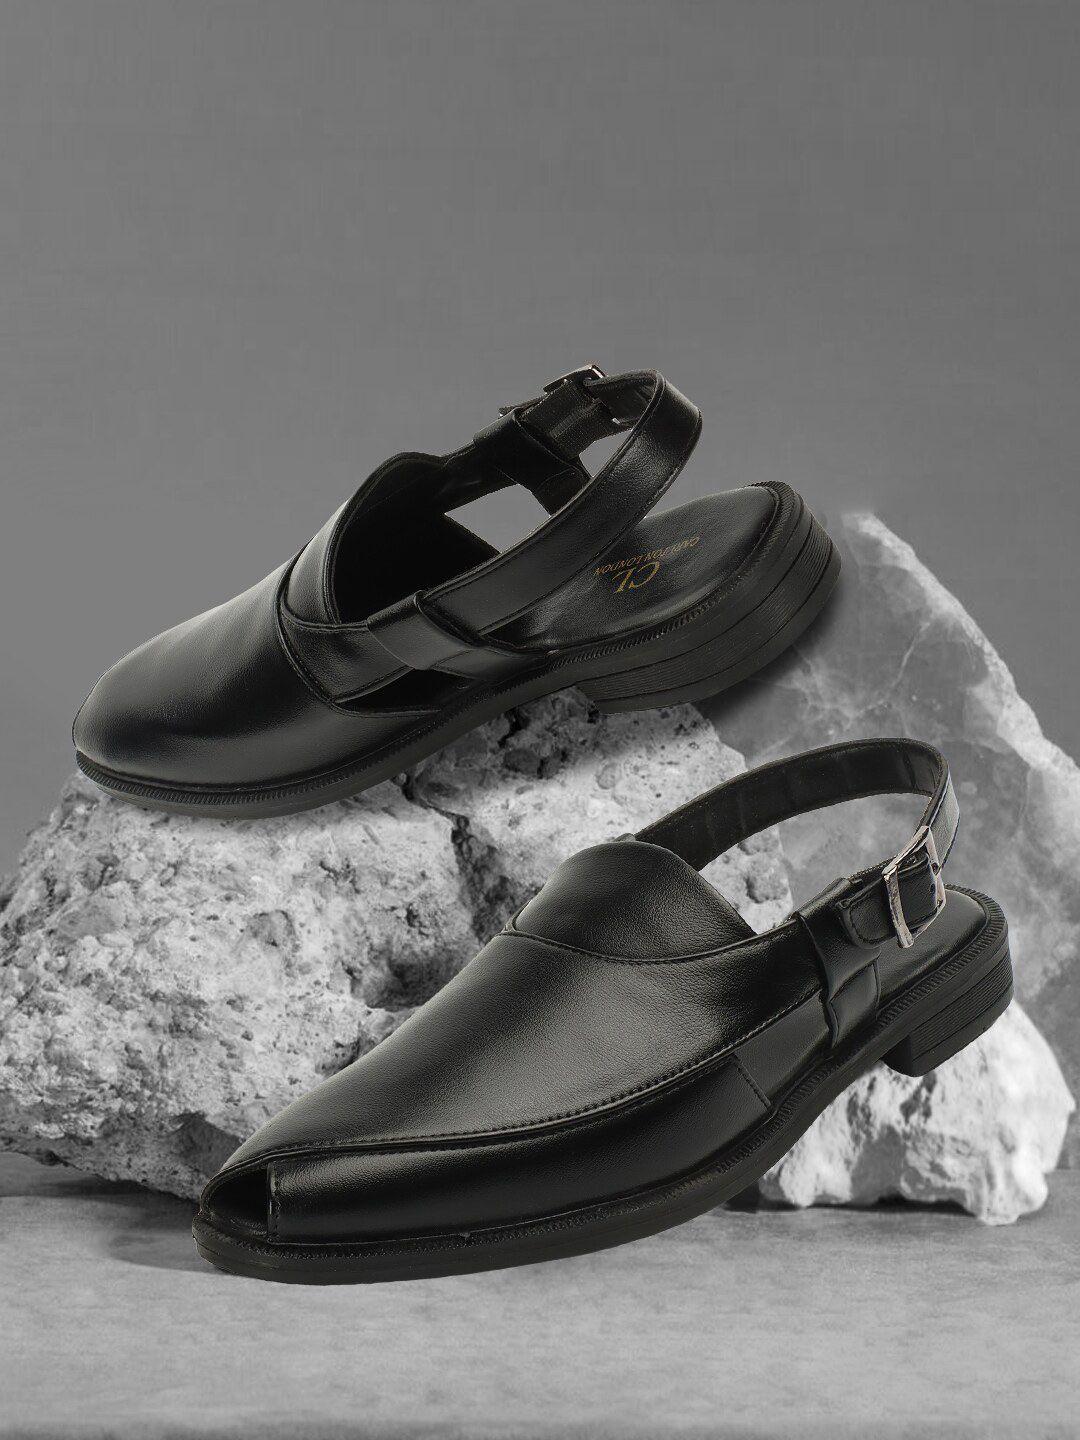 carlton london men textured comfort sandals